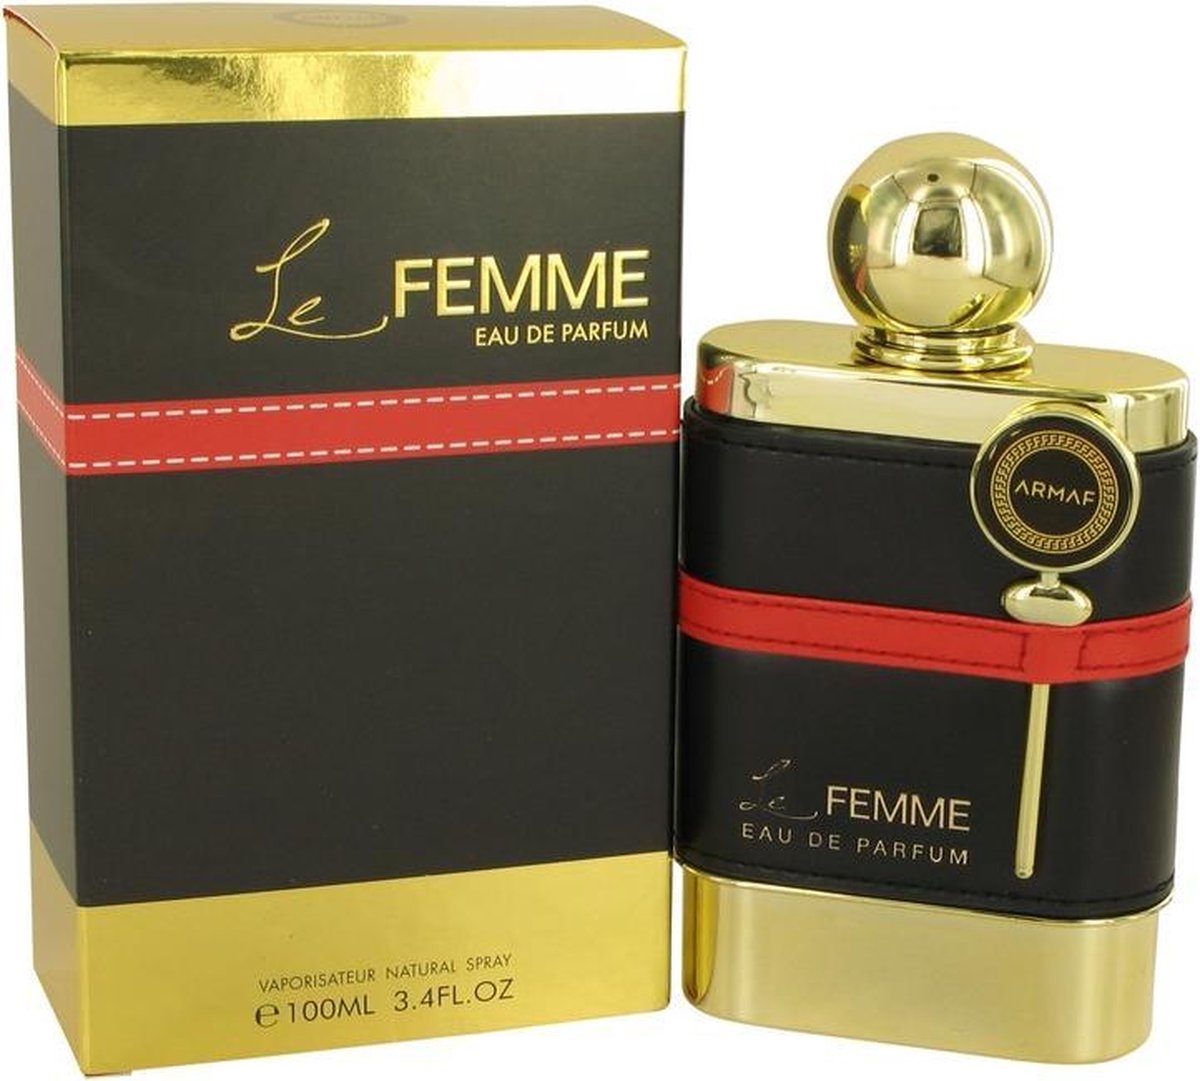 Armaf Le Femme by Armaf 100 ml - Eau De Parfum Spray